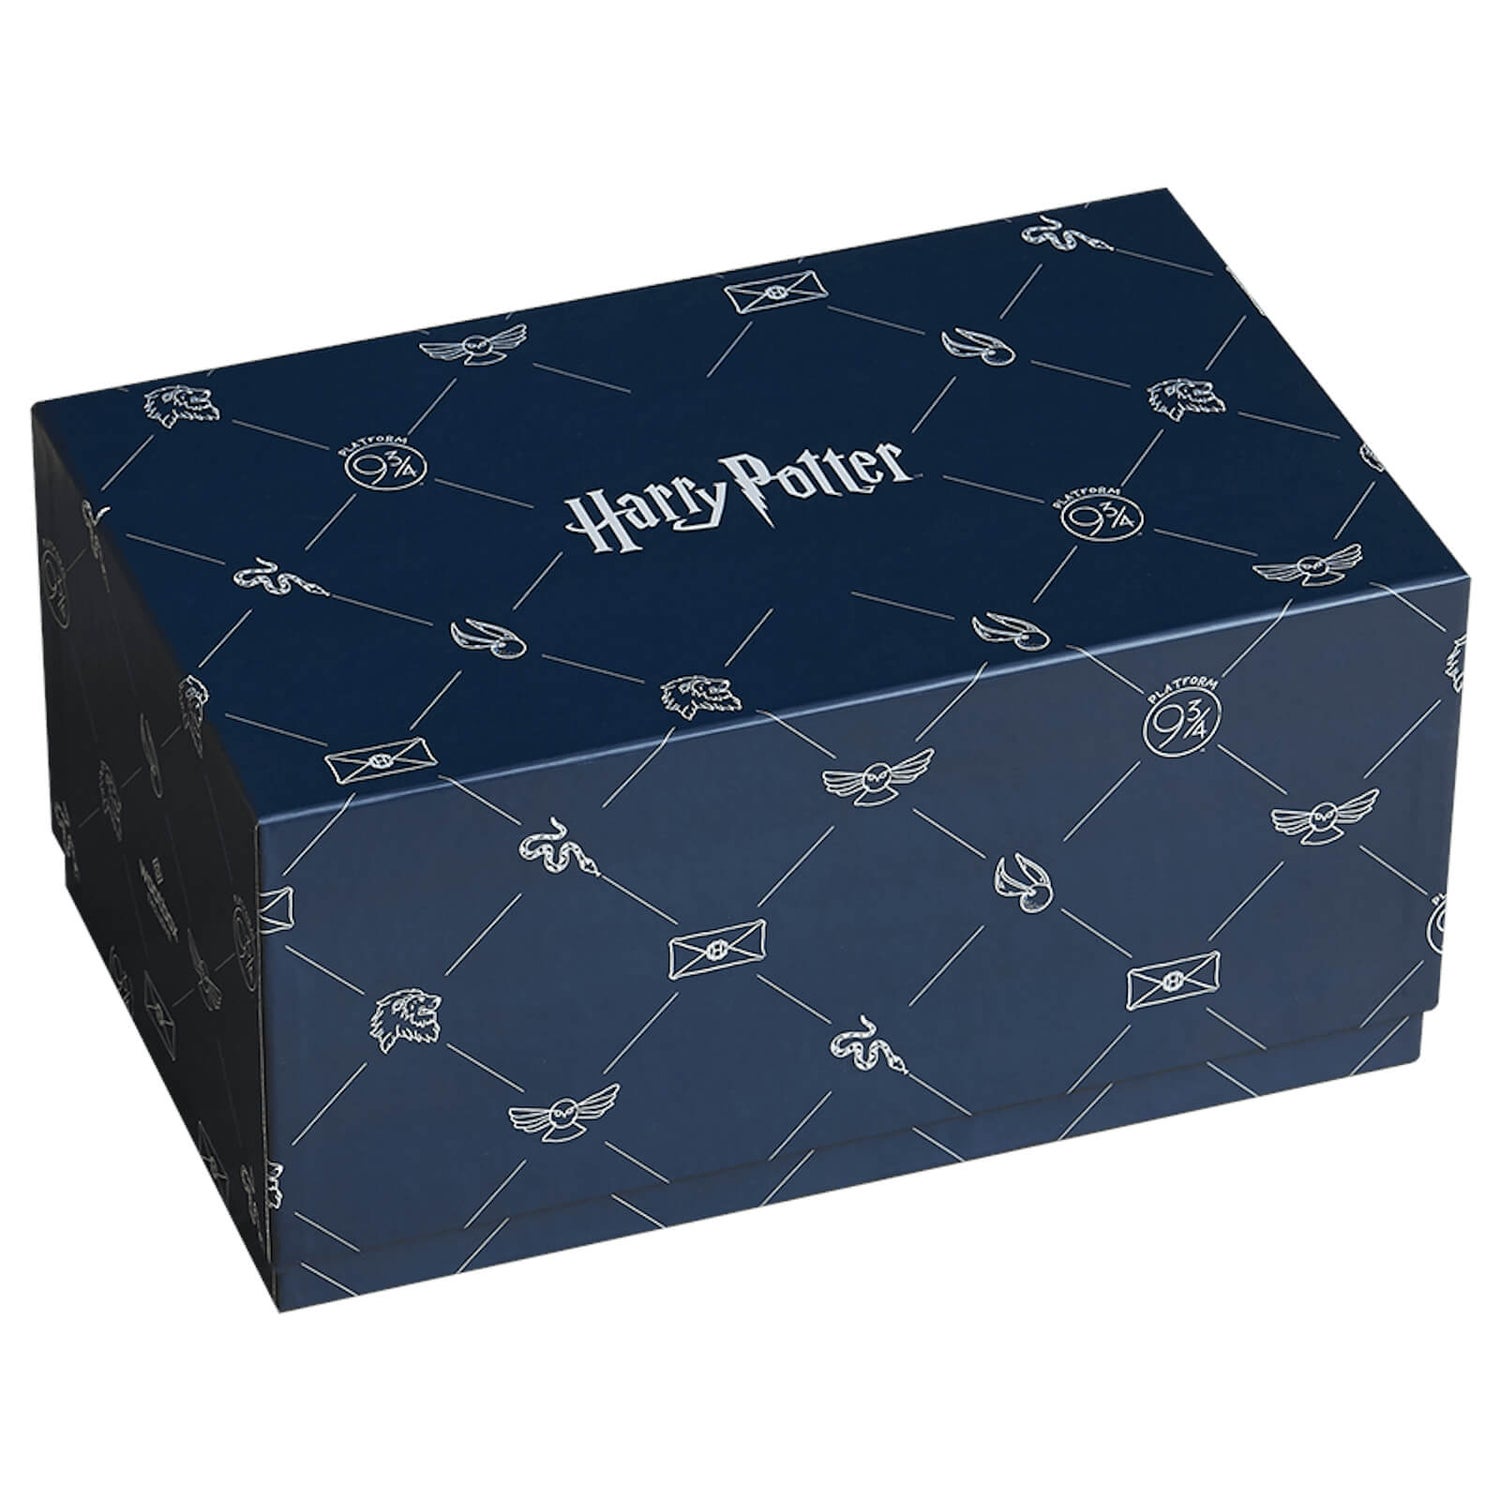 Mystery Box - Harry Potter December 2019